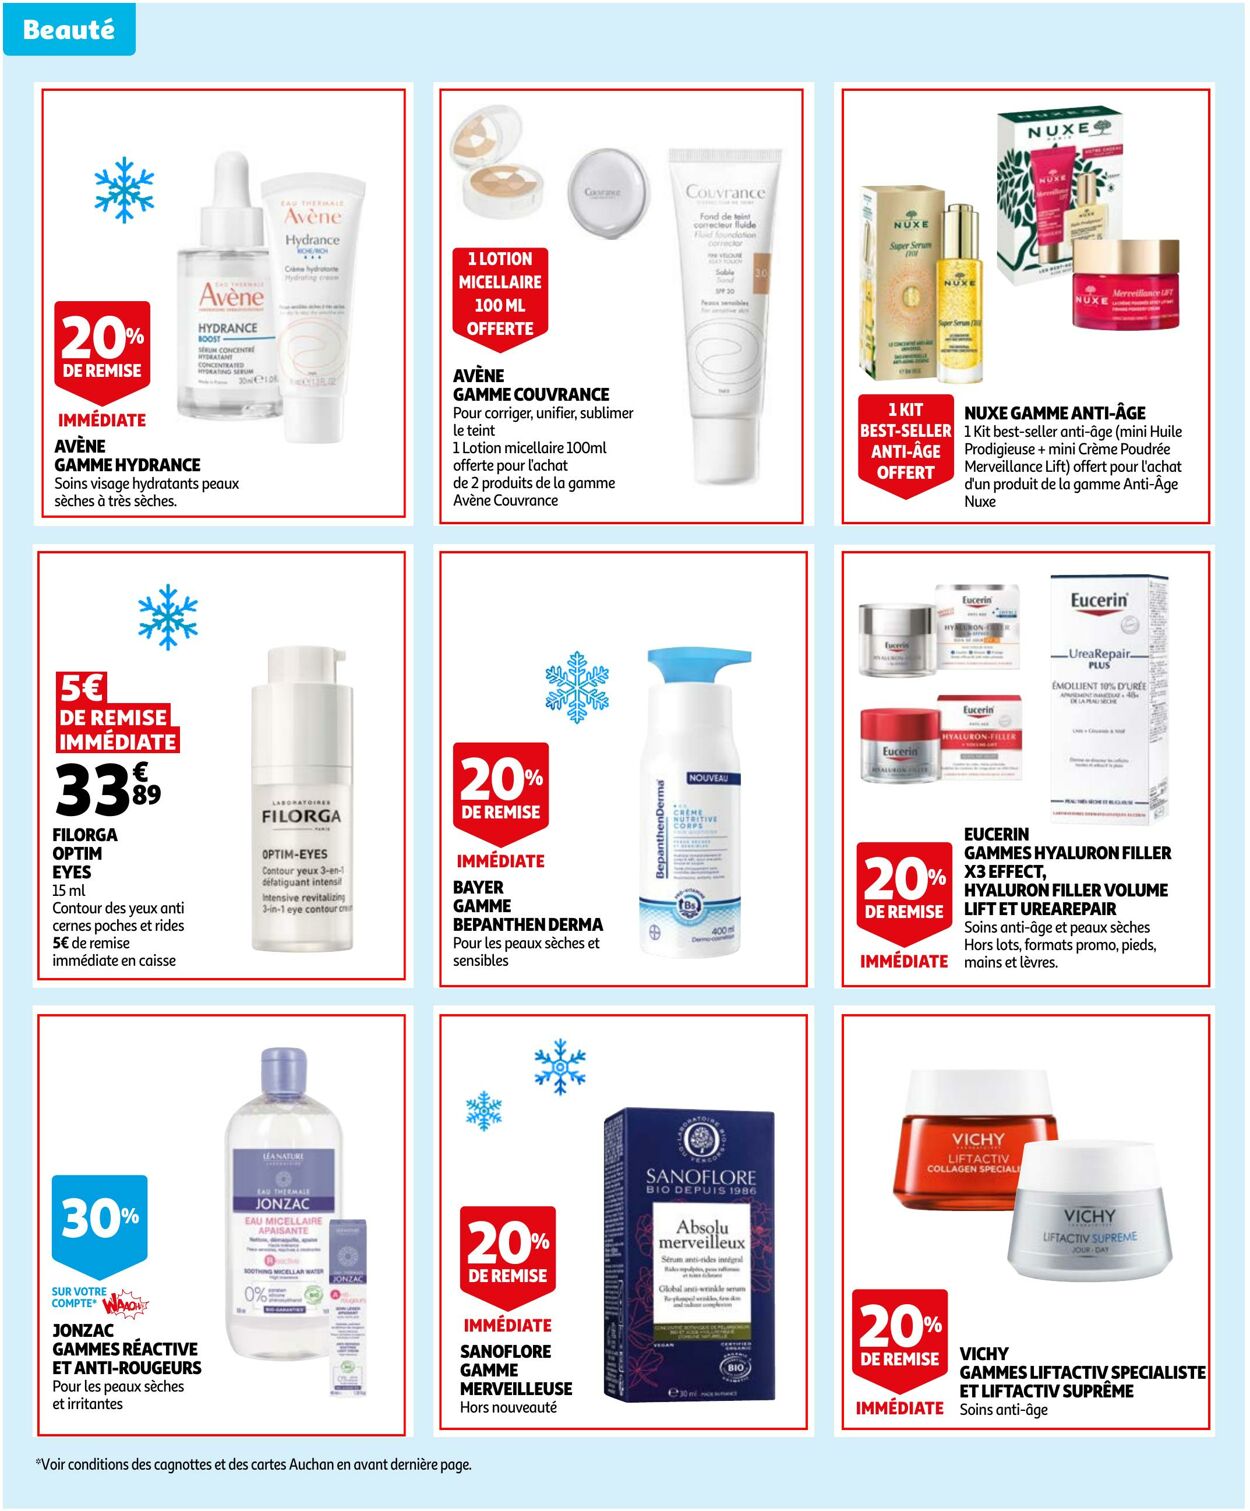 Catalogue Auchan 31.01.2023 - 20.02.2023